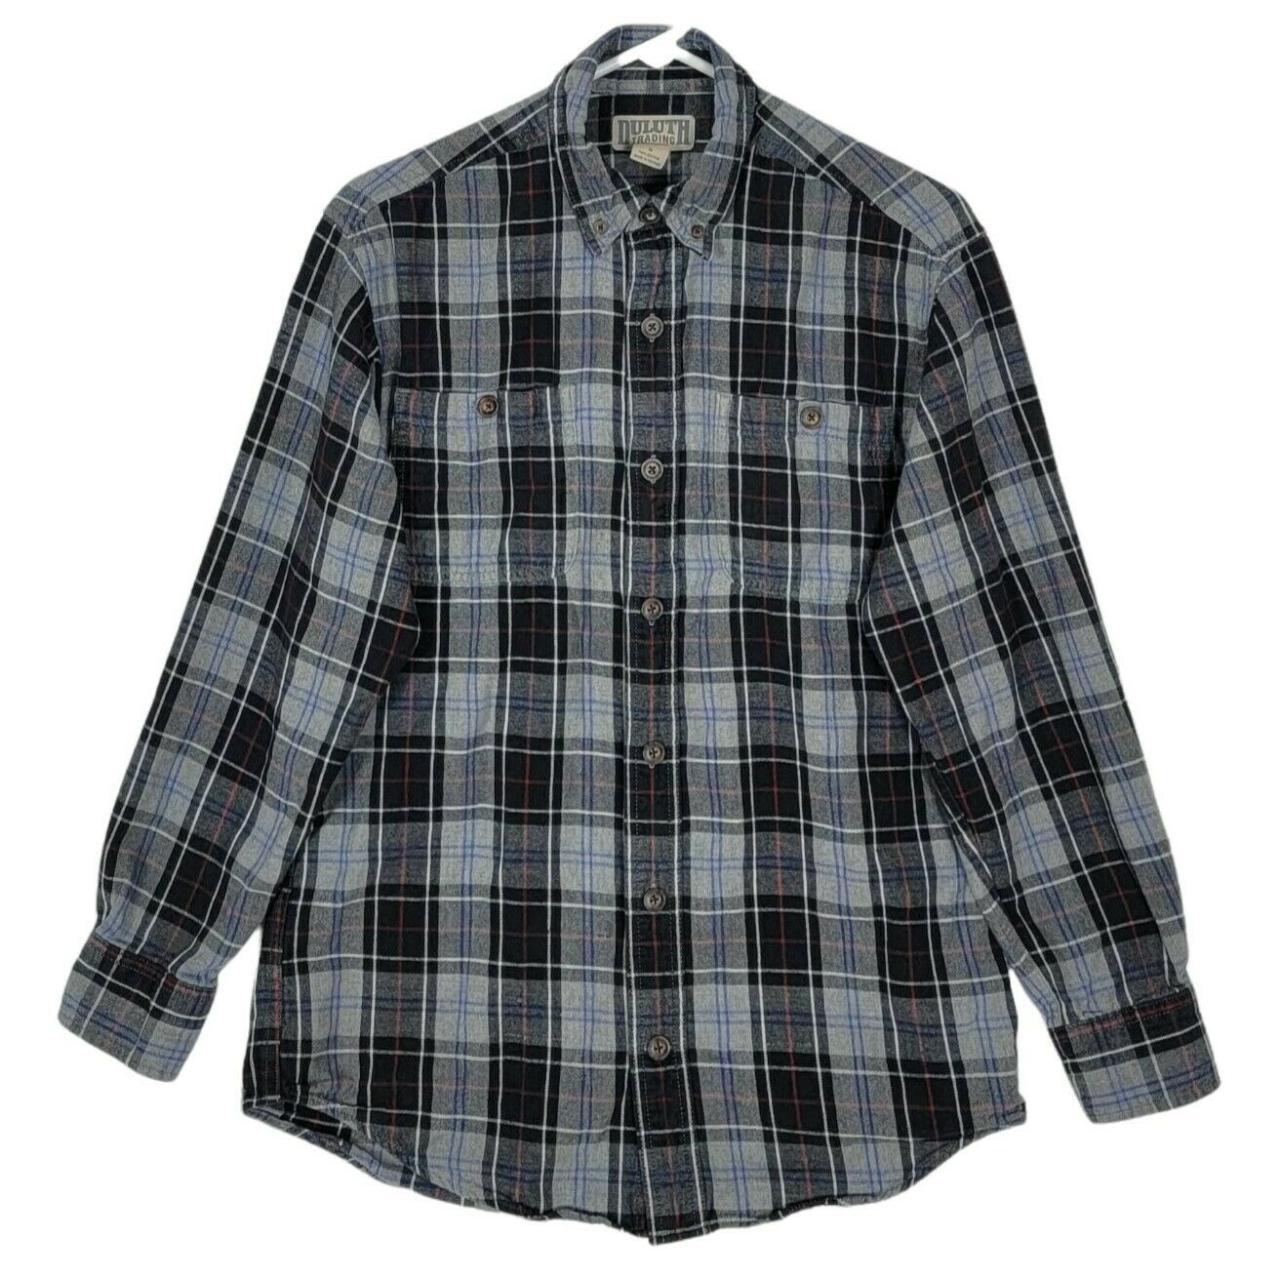 Duluth Trading Co Shirt Men's S Plaid Flannel Button... - Depop